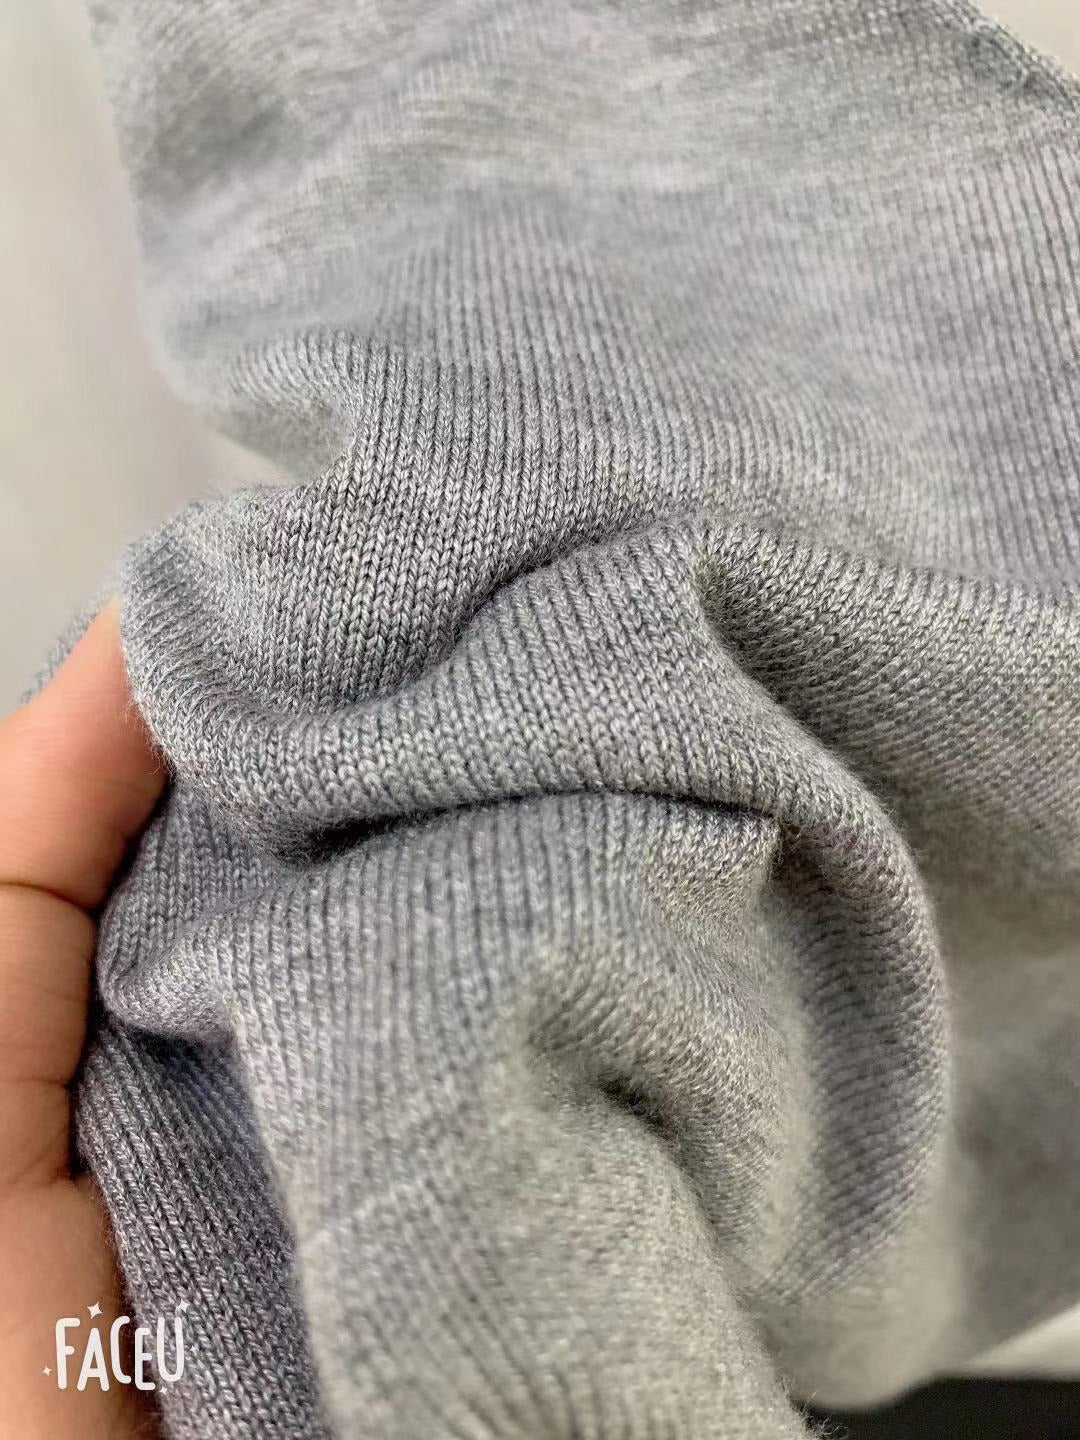 Halter Bandage Sexy Crop Tops Solid Cotton Underwear Tank Vest Slim Fit Sleeveless